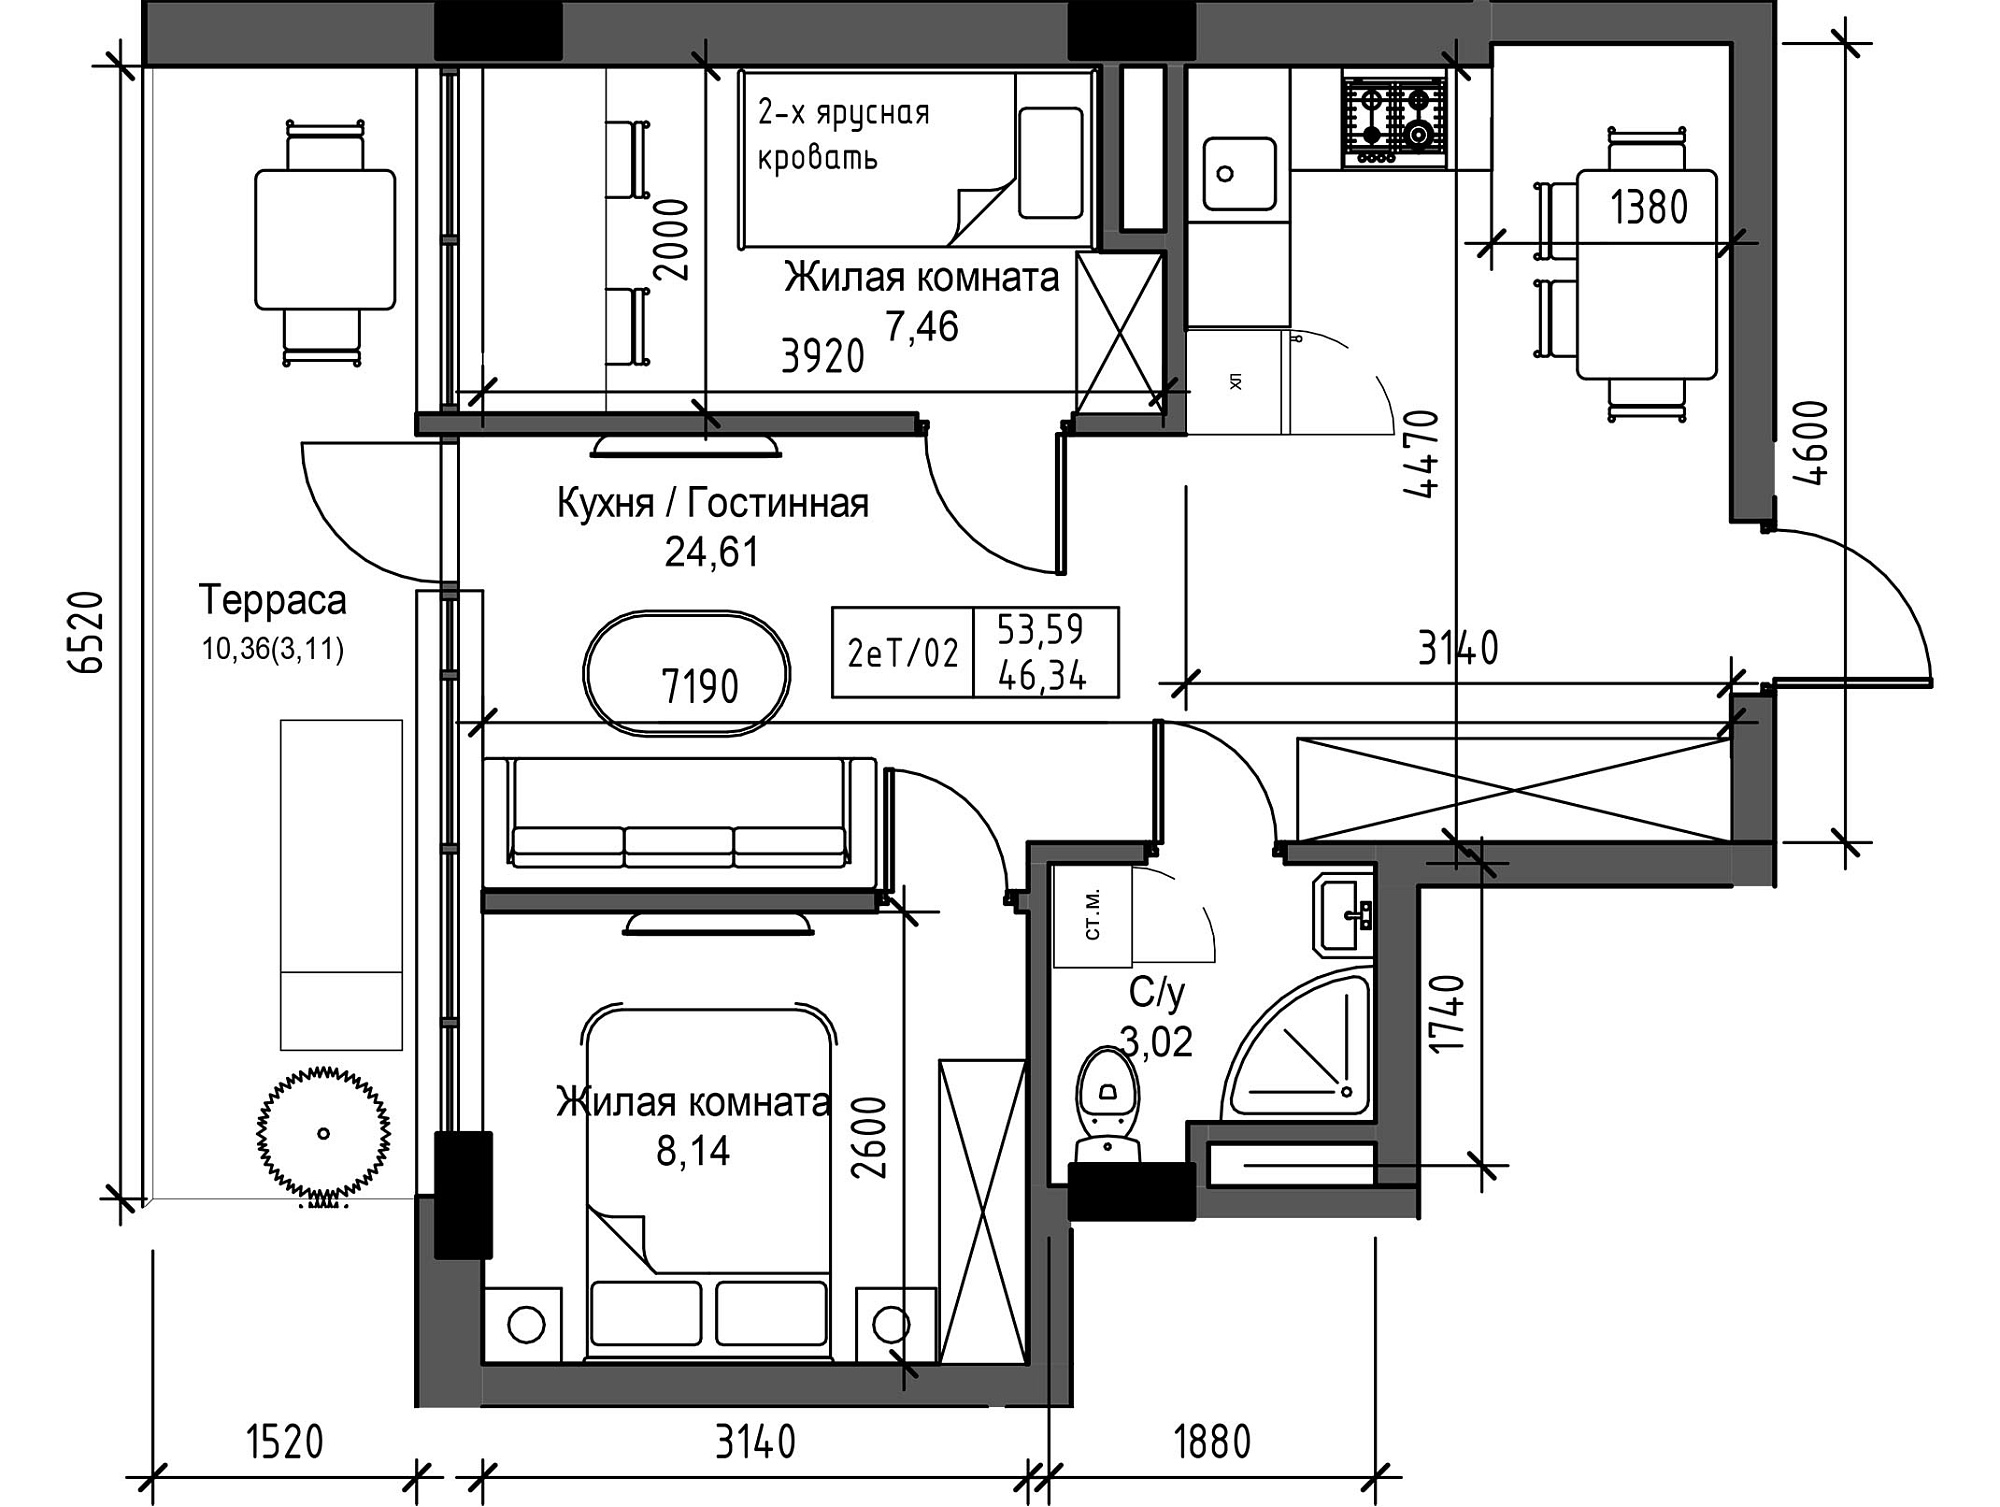 Planning 2-rm flats area 43.32m2, UM-003-10/0108.